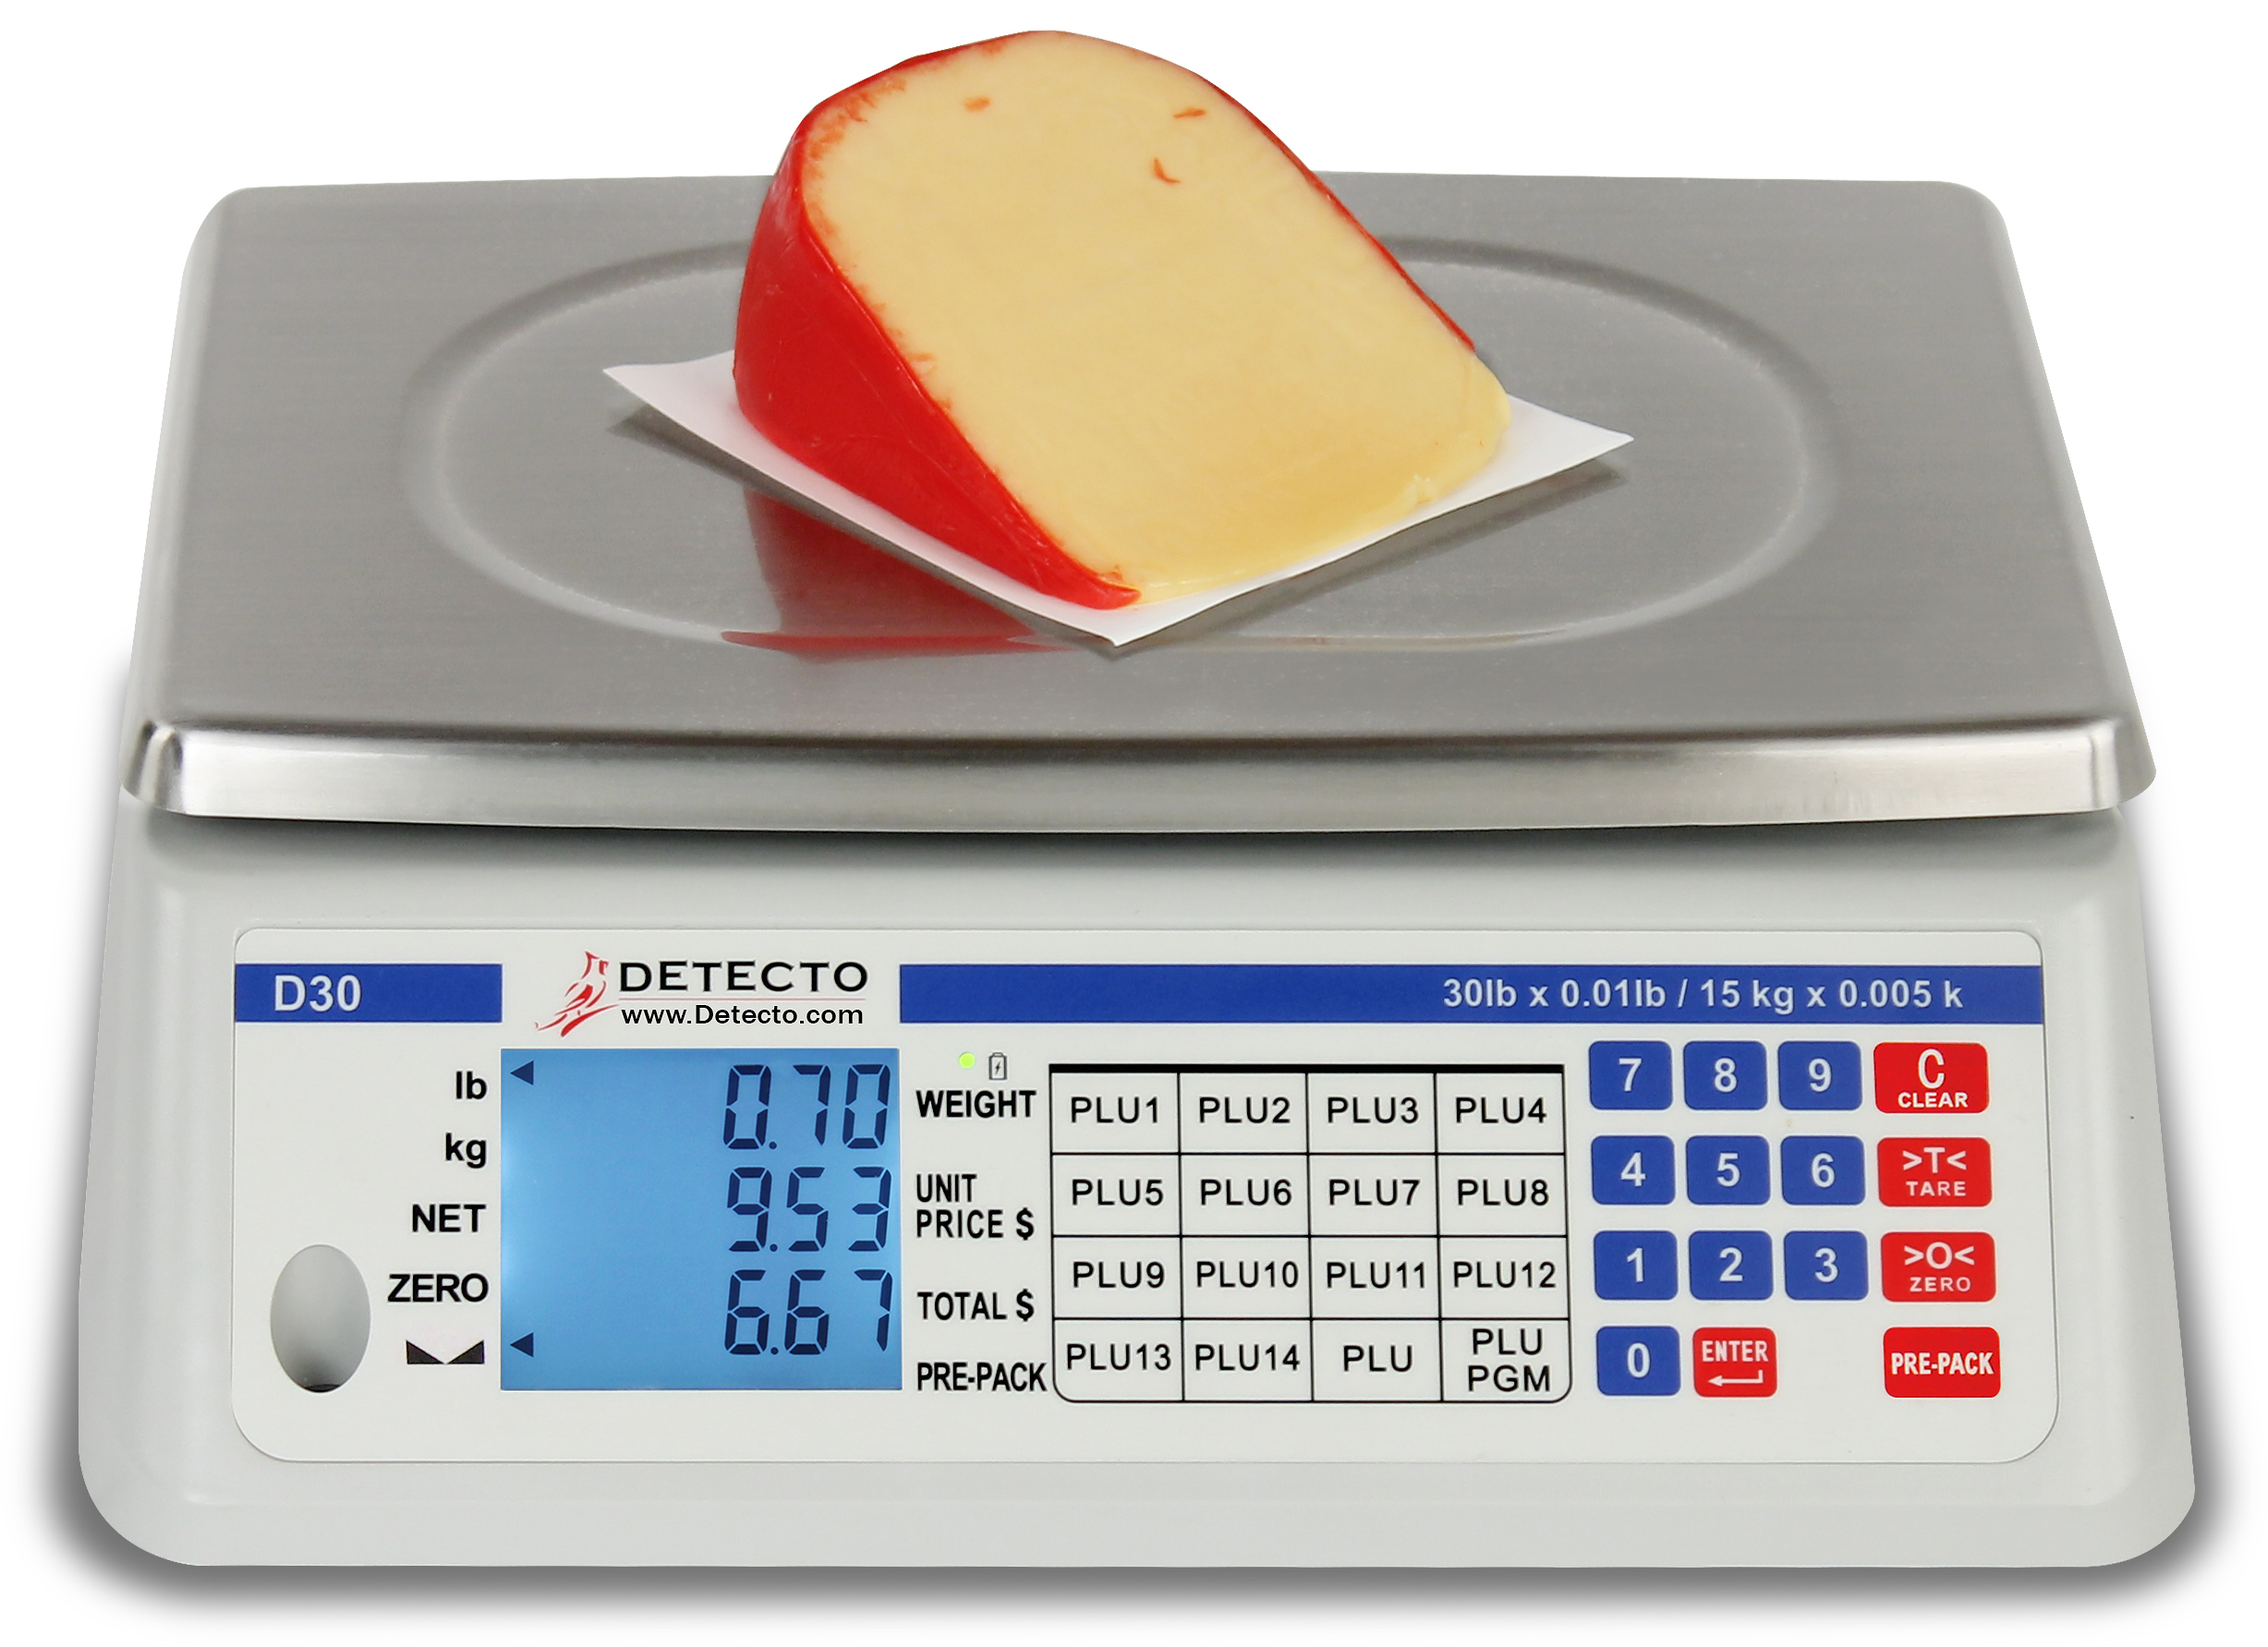 VK-2D Kitchen Scale - Prime USA Scales